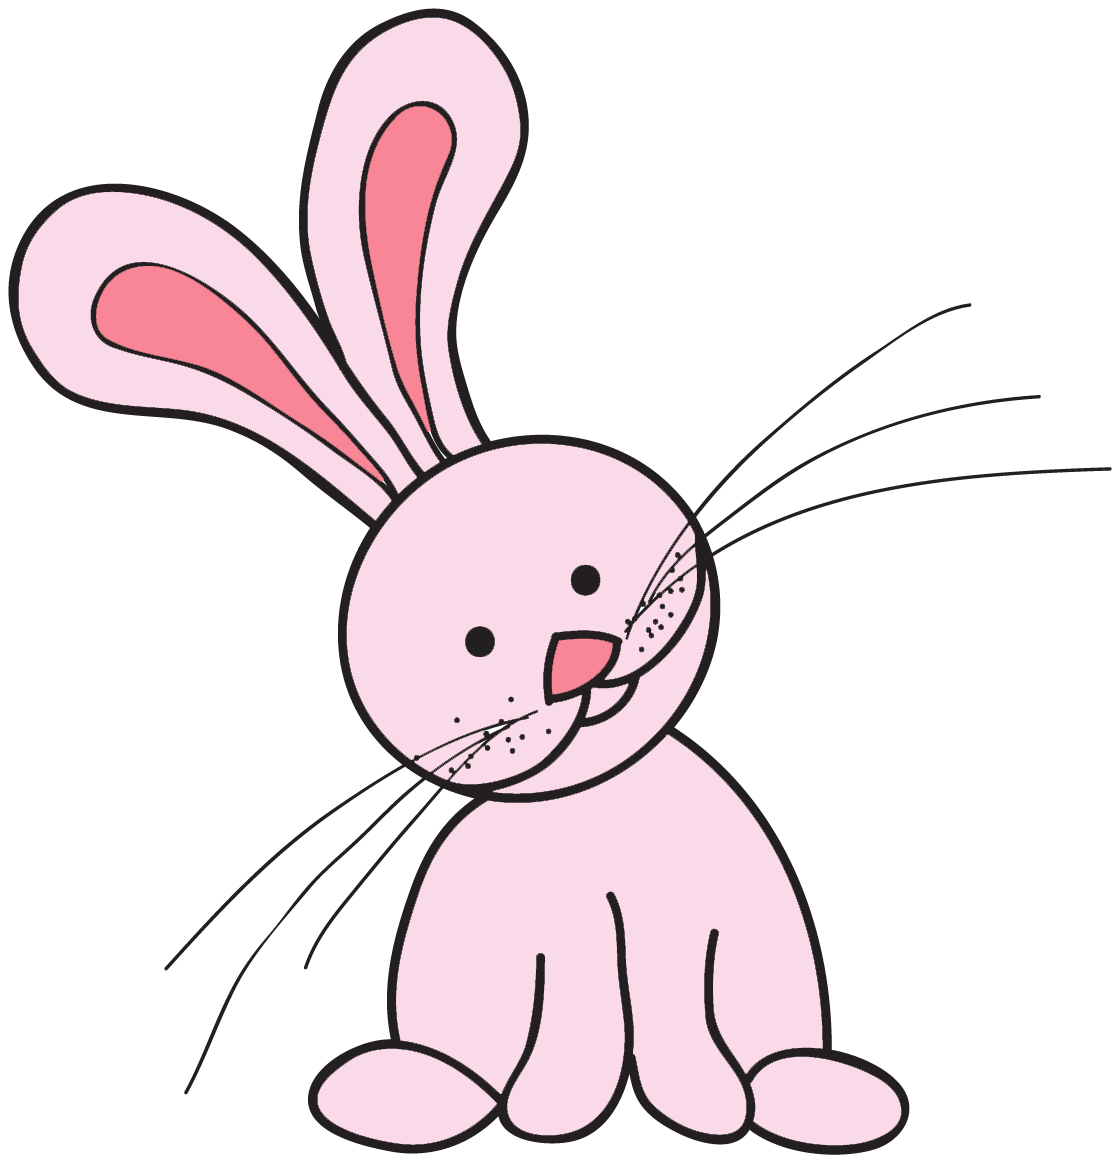 Cartoon Rabbits To Draw - ClipArt Best - ClipArt Best - ClipArt Best